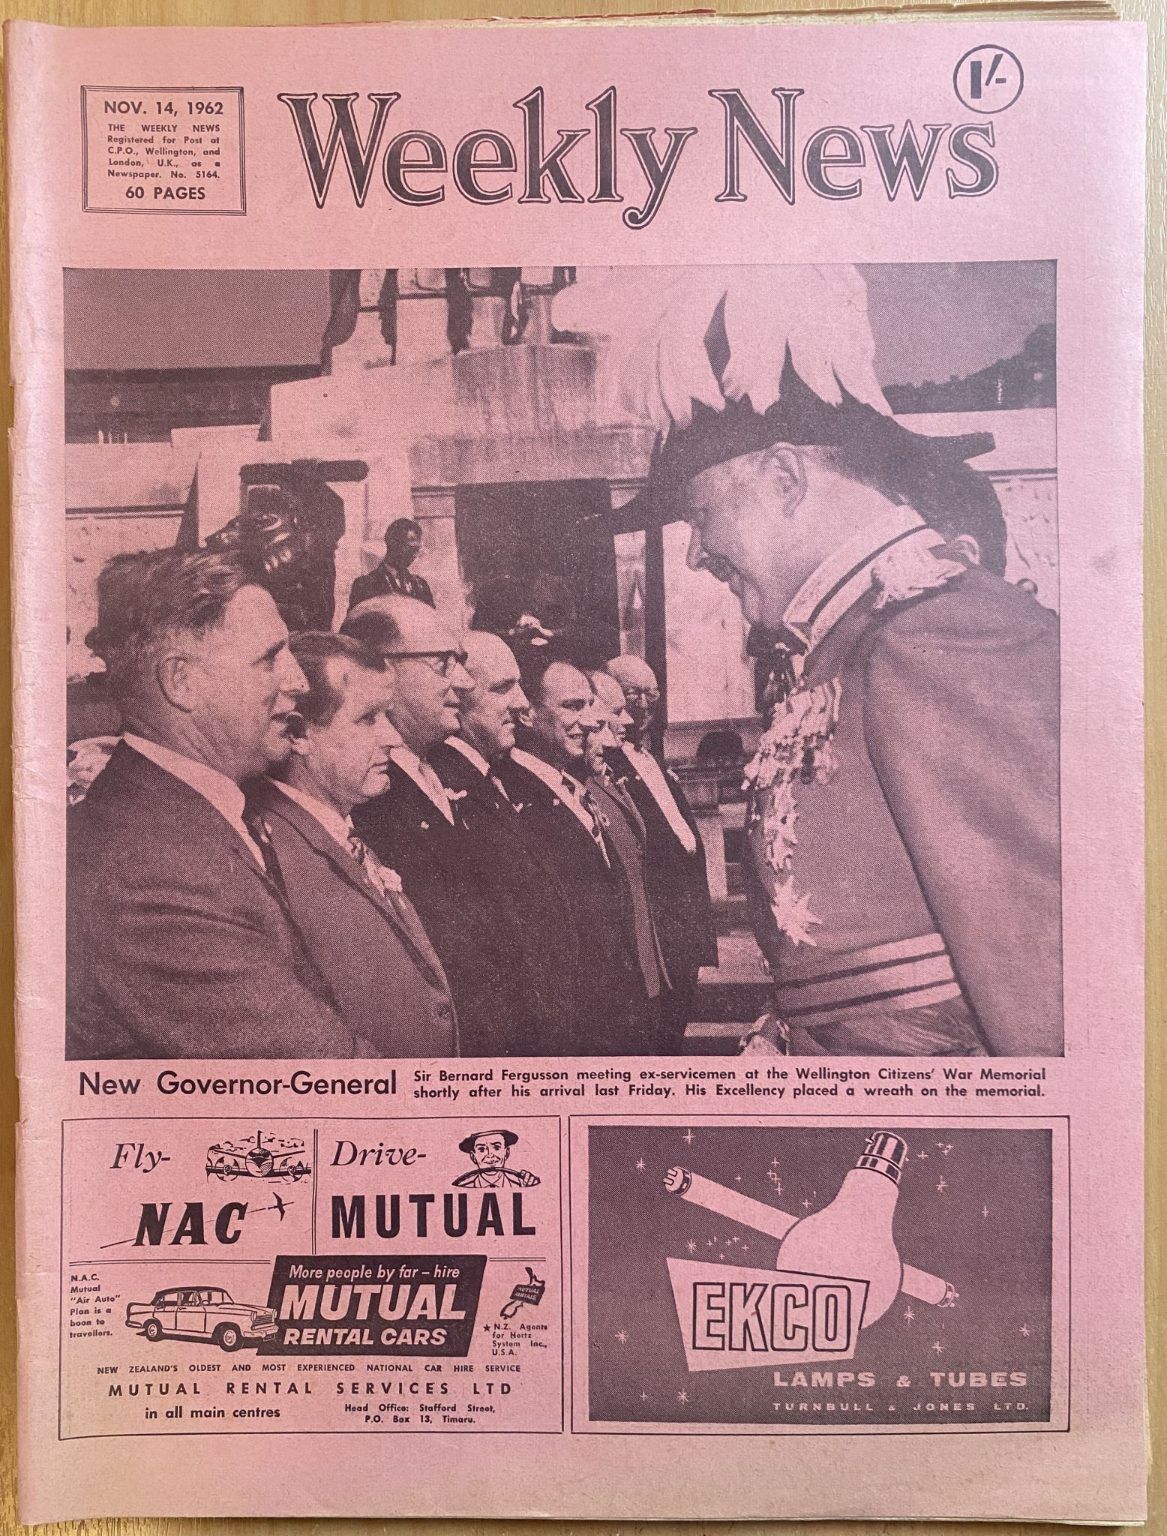 OLD NEWSPAPER: The Weekly News, No. 5164, 14 November 1962